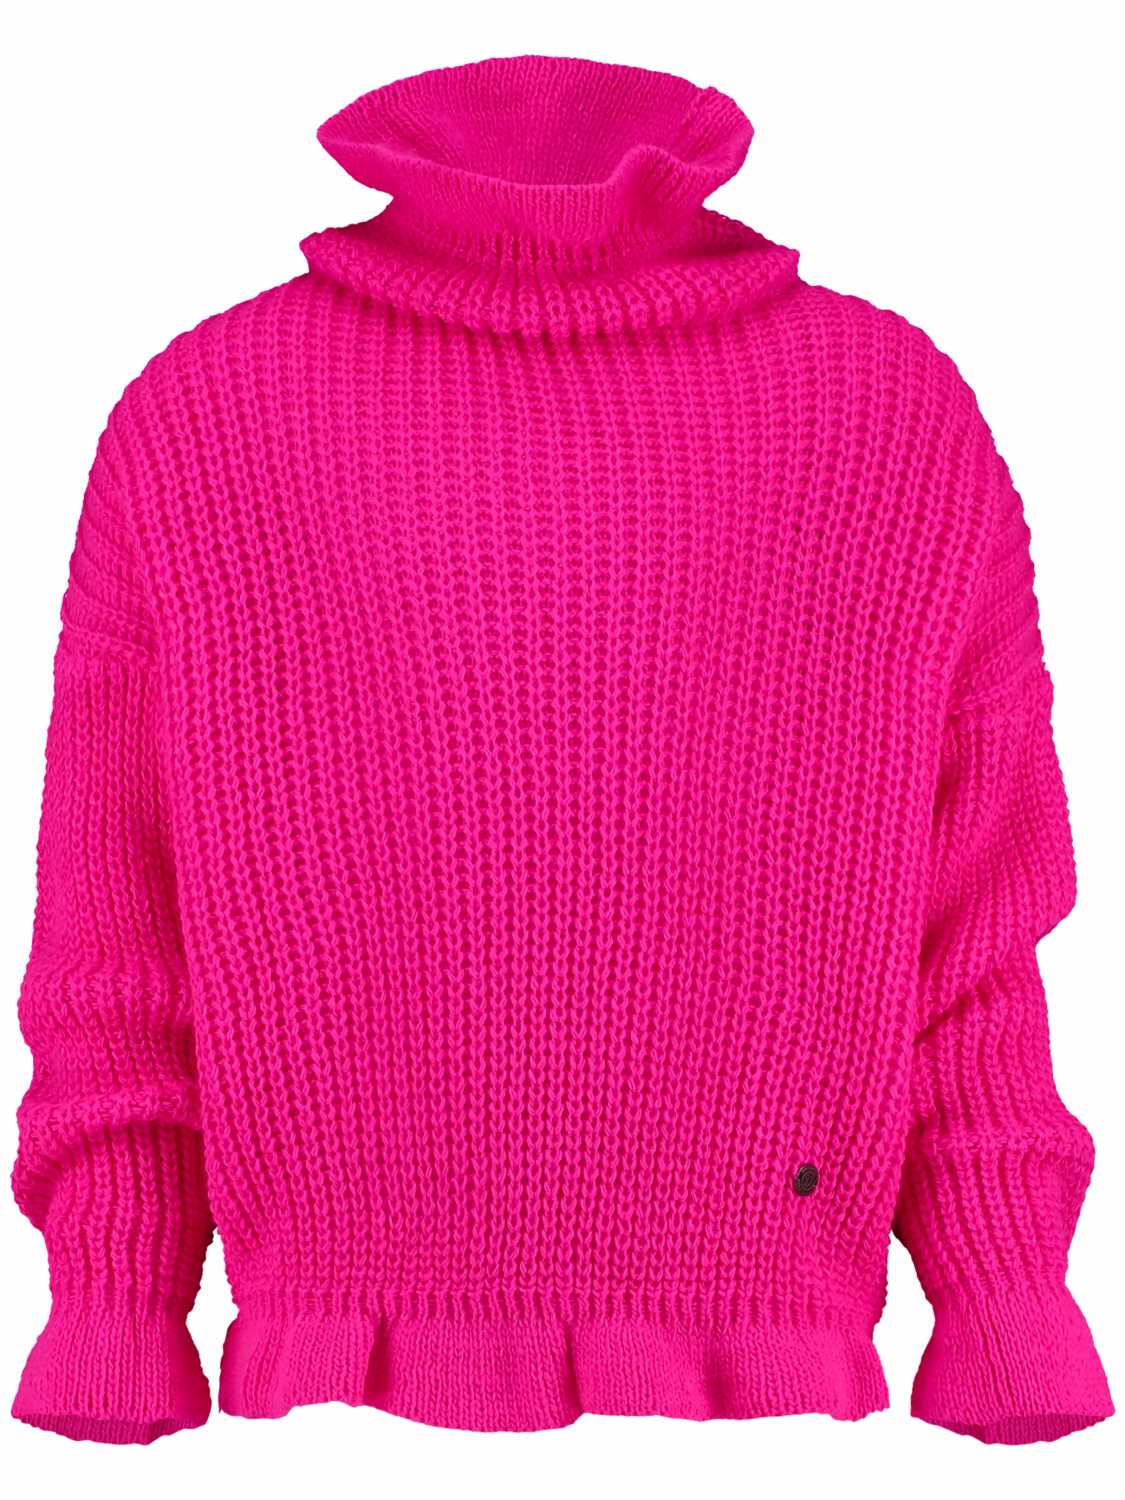 Mädchen Pullover Strickpullover Marina Neon Pink